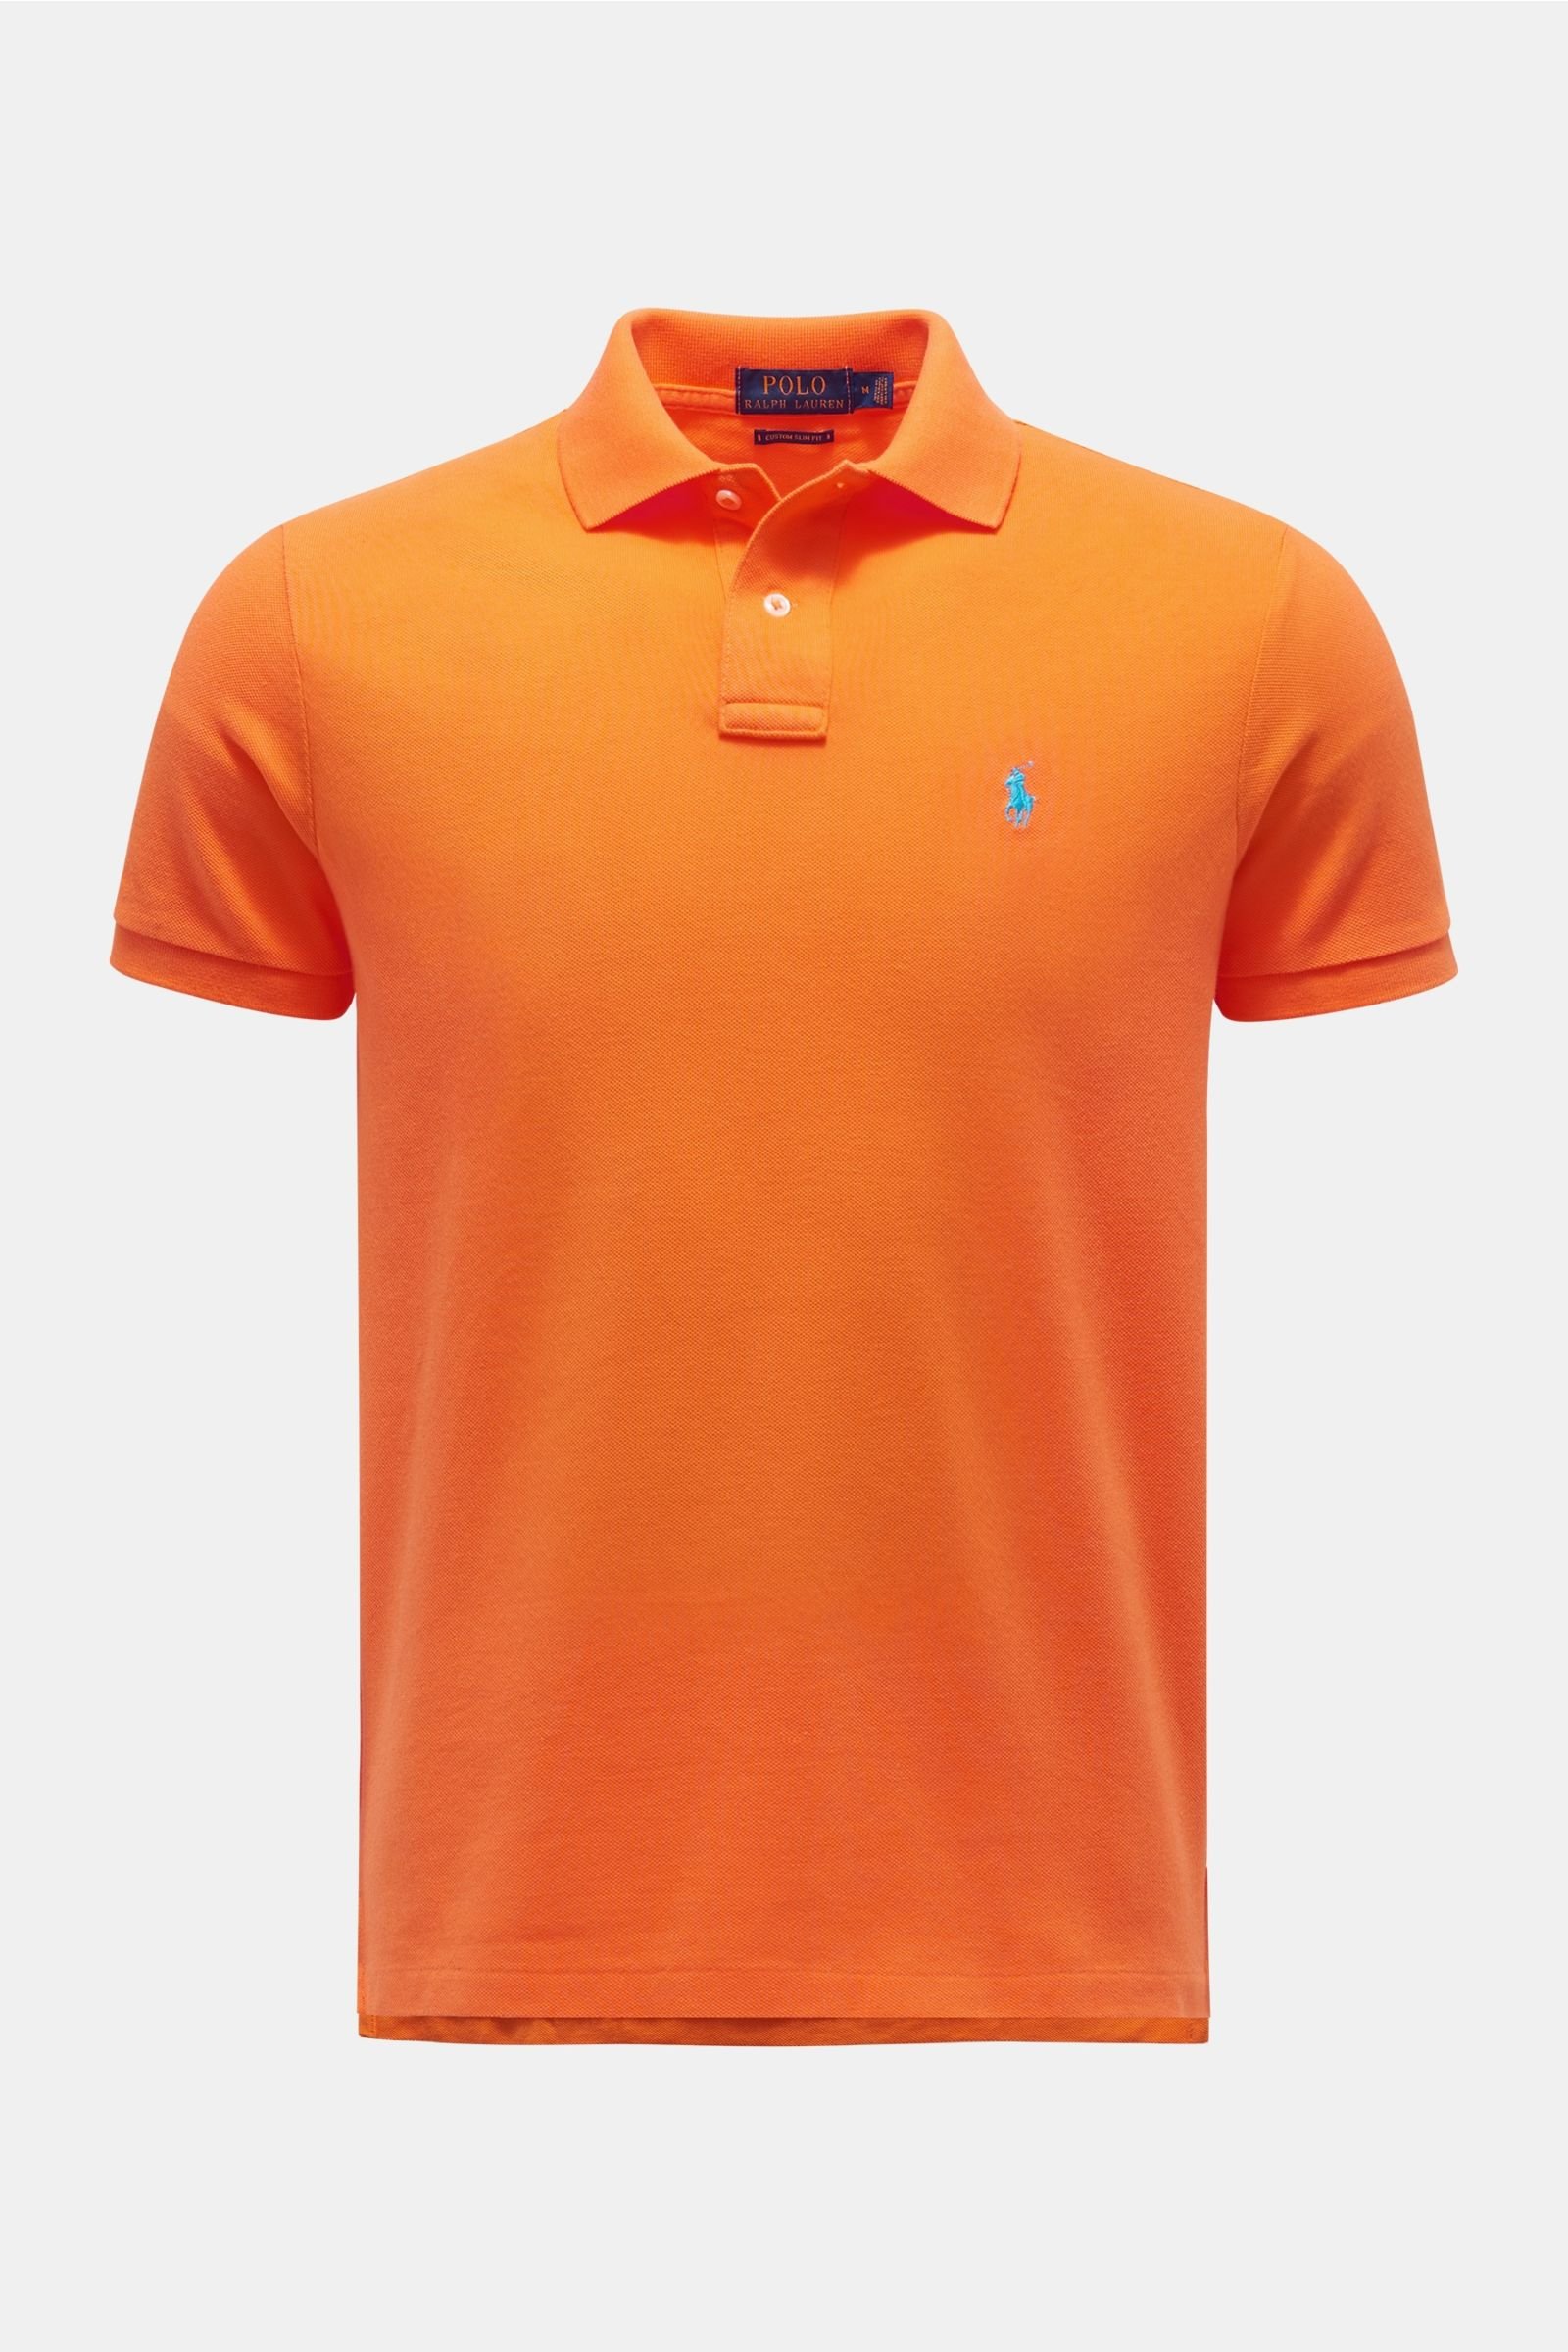 Poloshirt orange